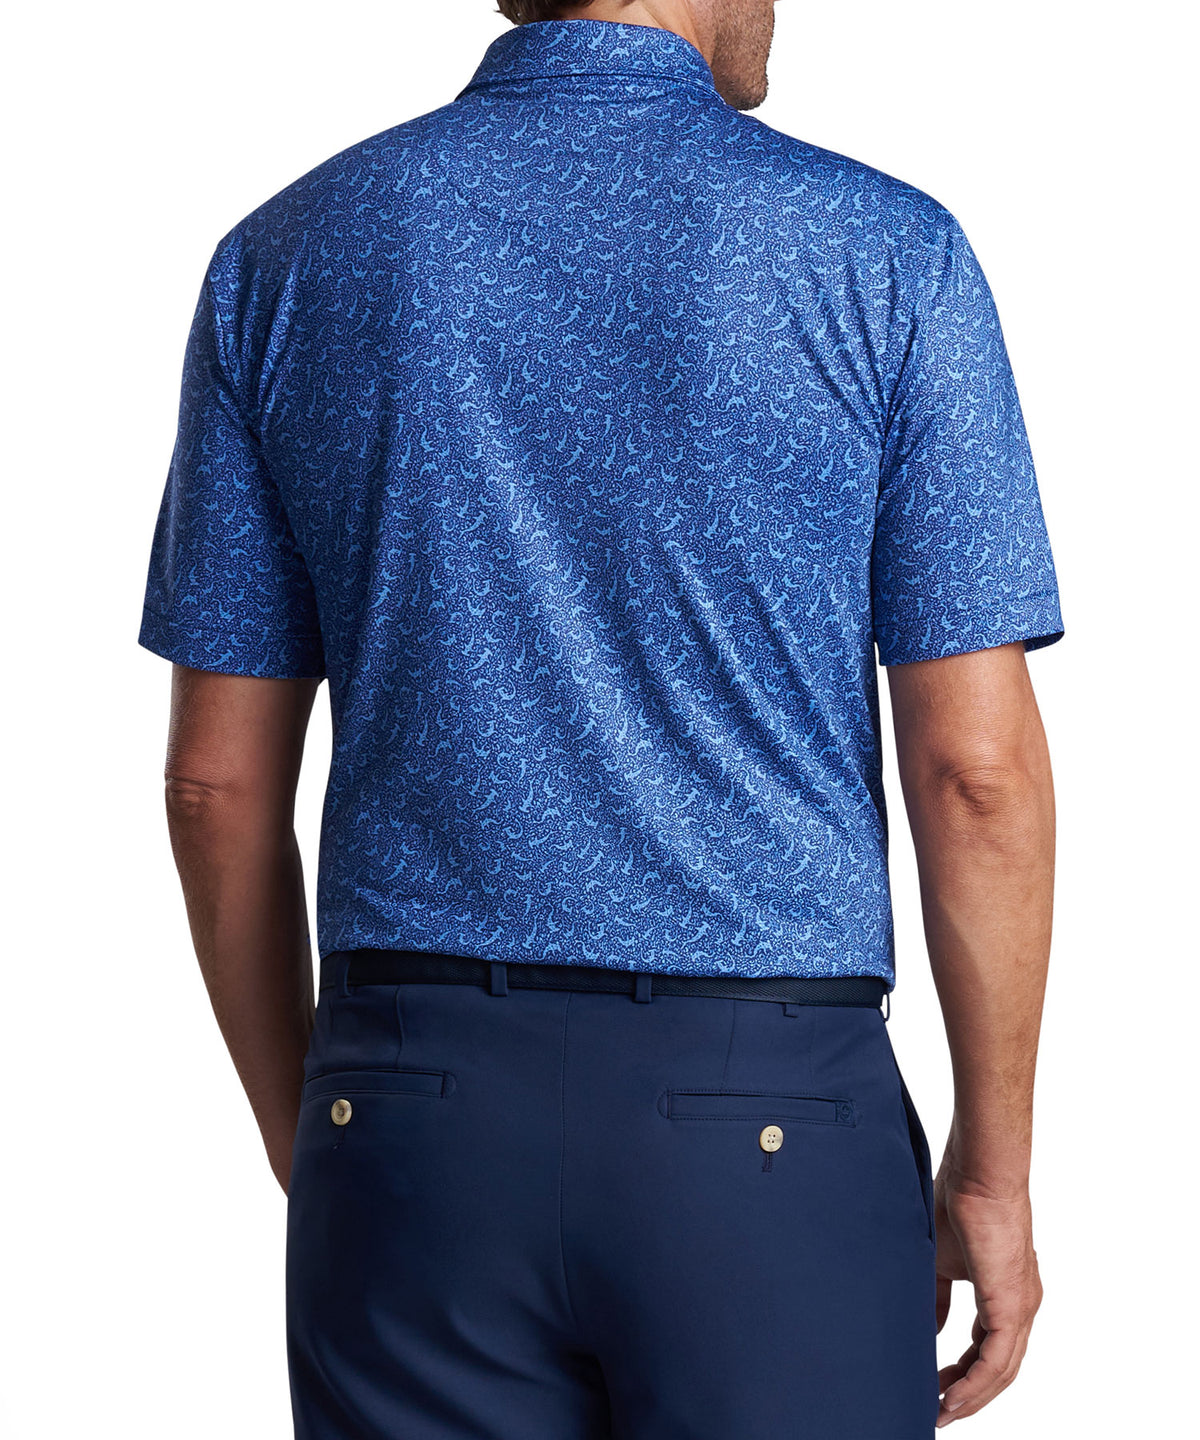 Peter Millar Short Sleeve Hammertime Print Polo Knit Shirt, Big & Tall